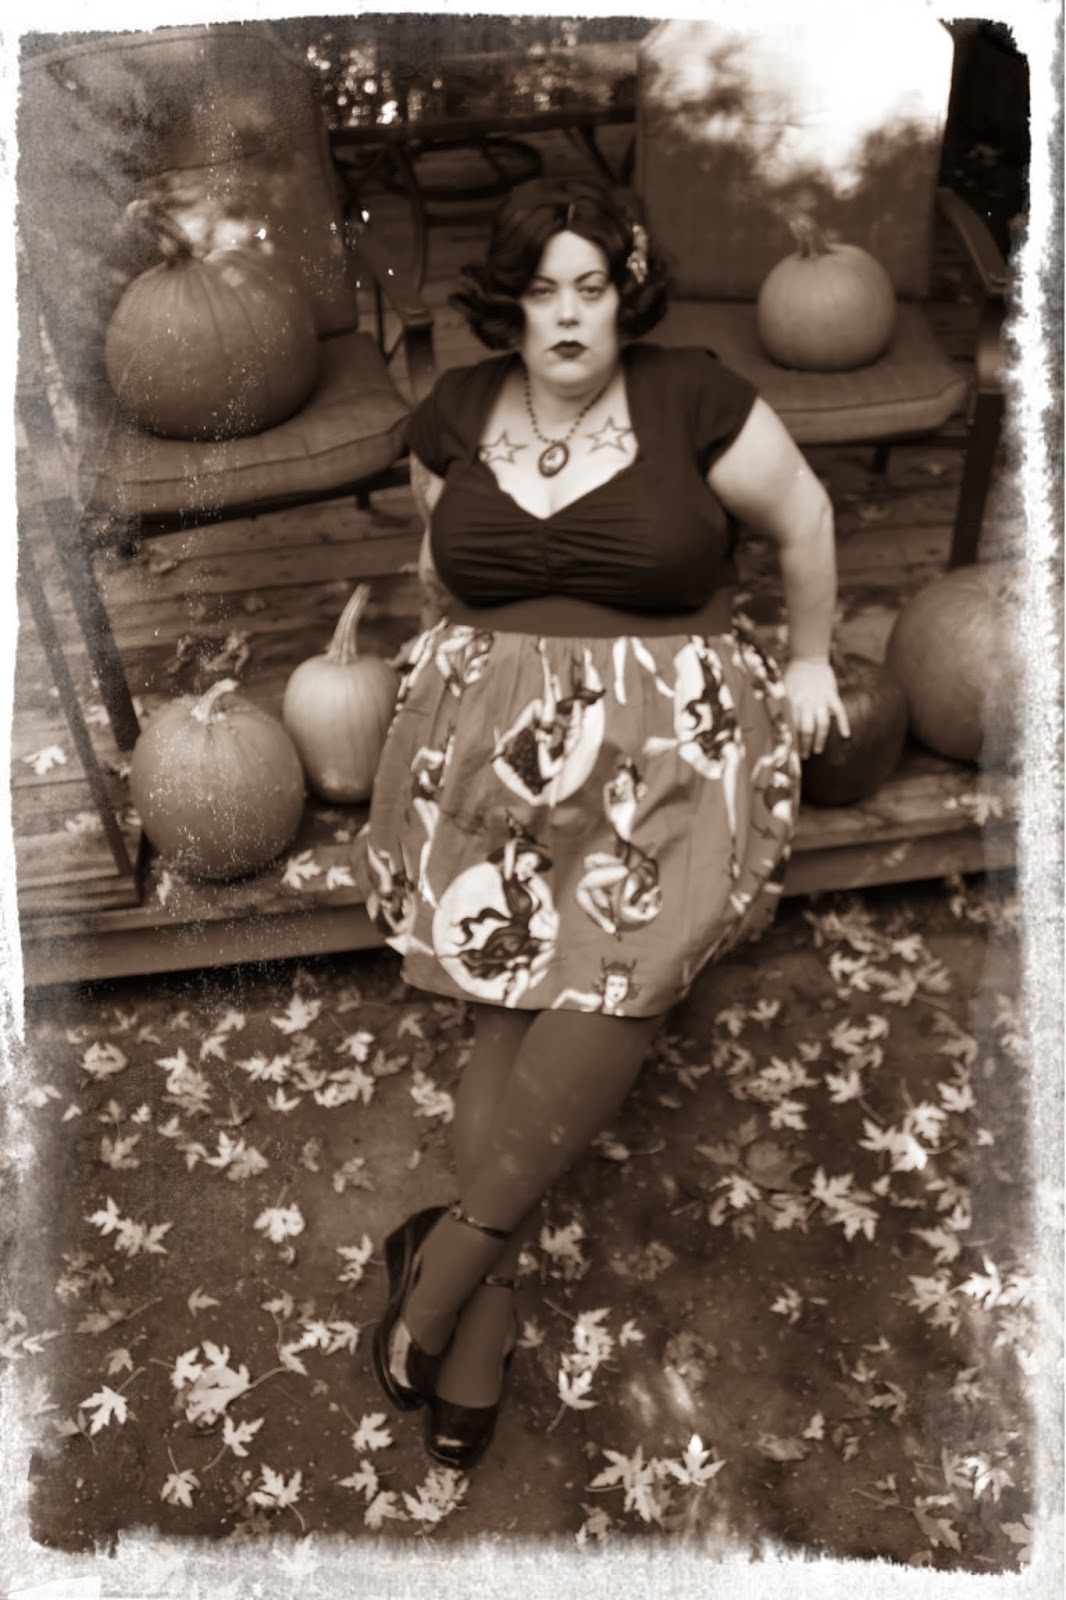 Fatshion Peepshow: Trick or Treat Halloween Vintage Pin Up Skirt